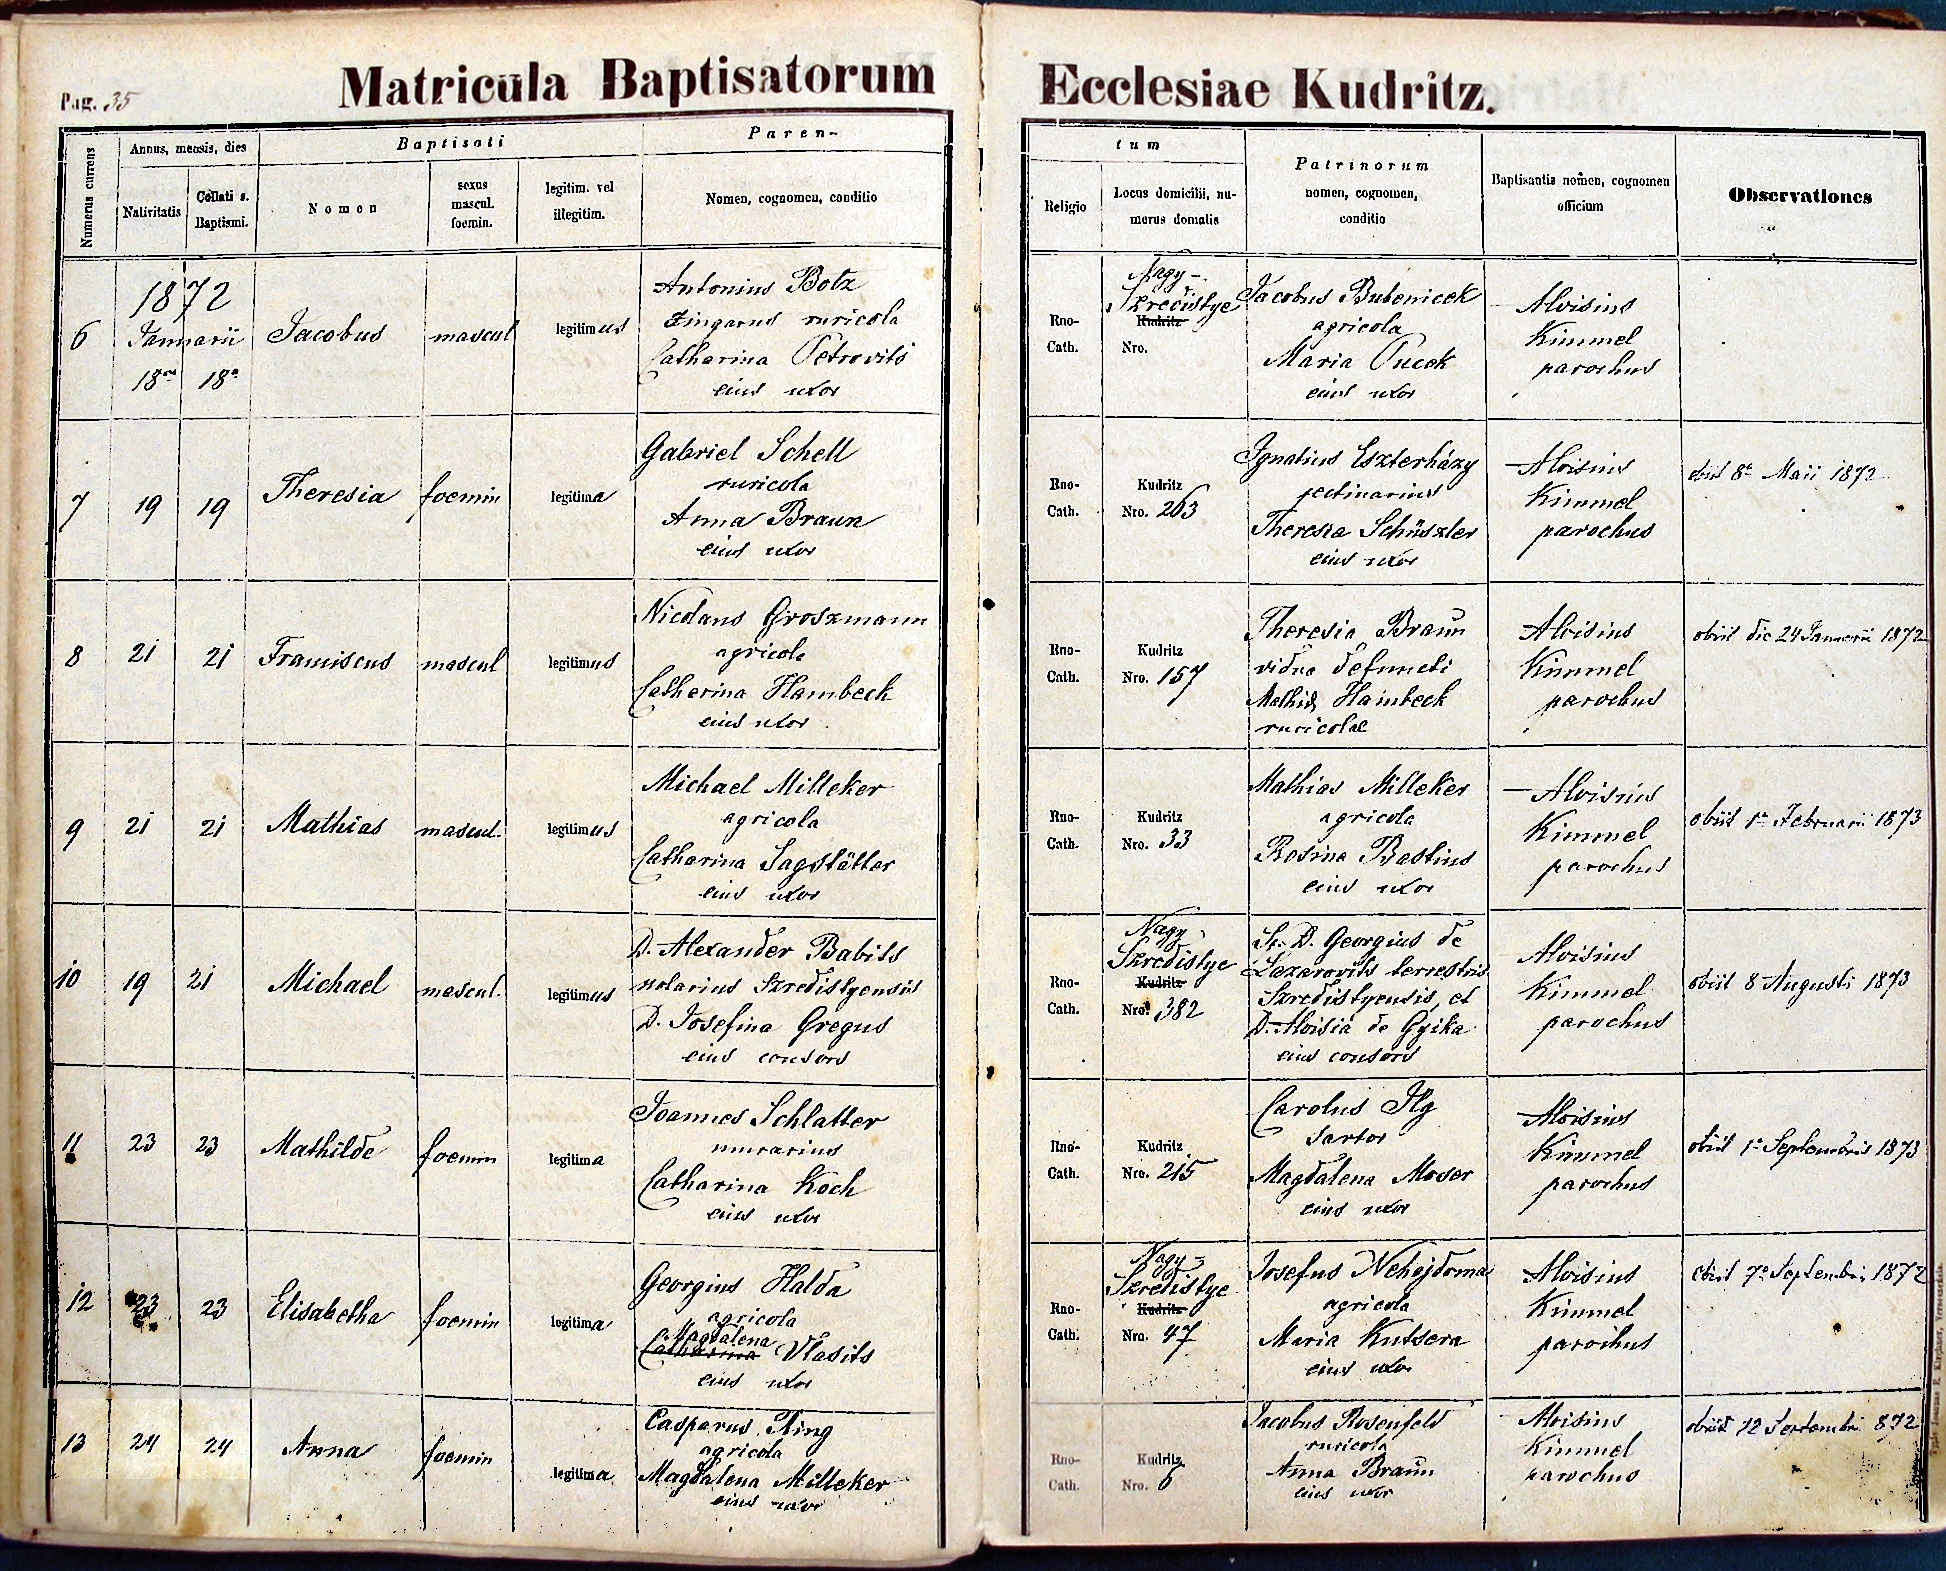 images/church_records/BIRTHS/1870-1879B/1872/035